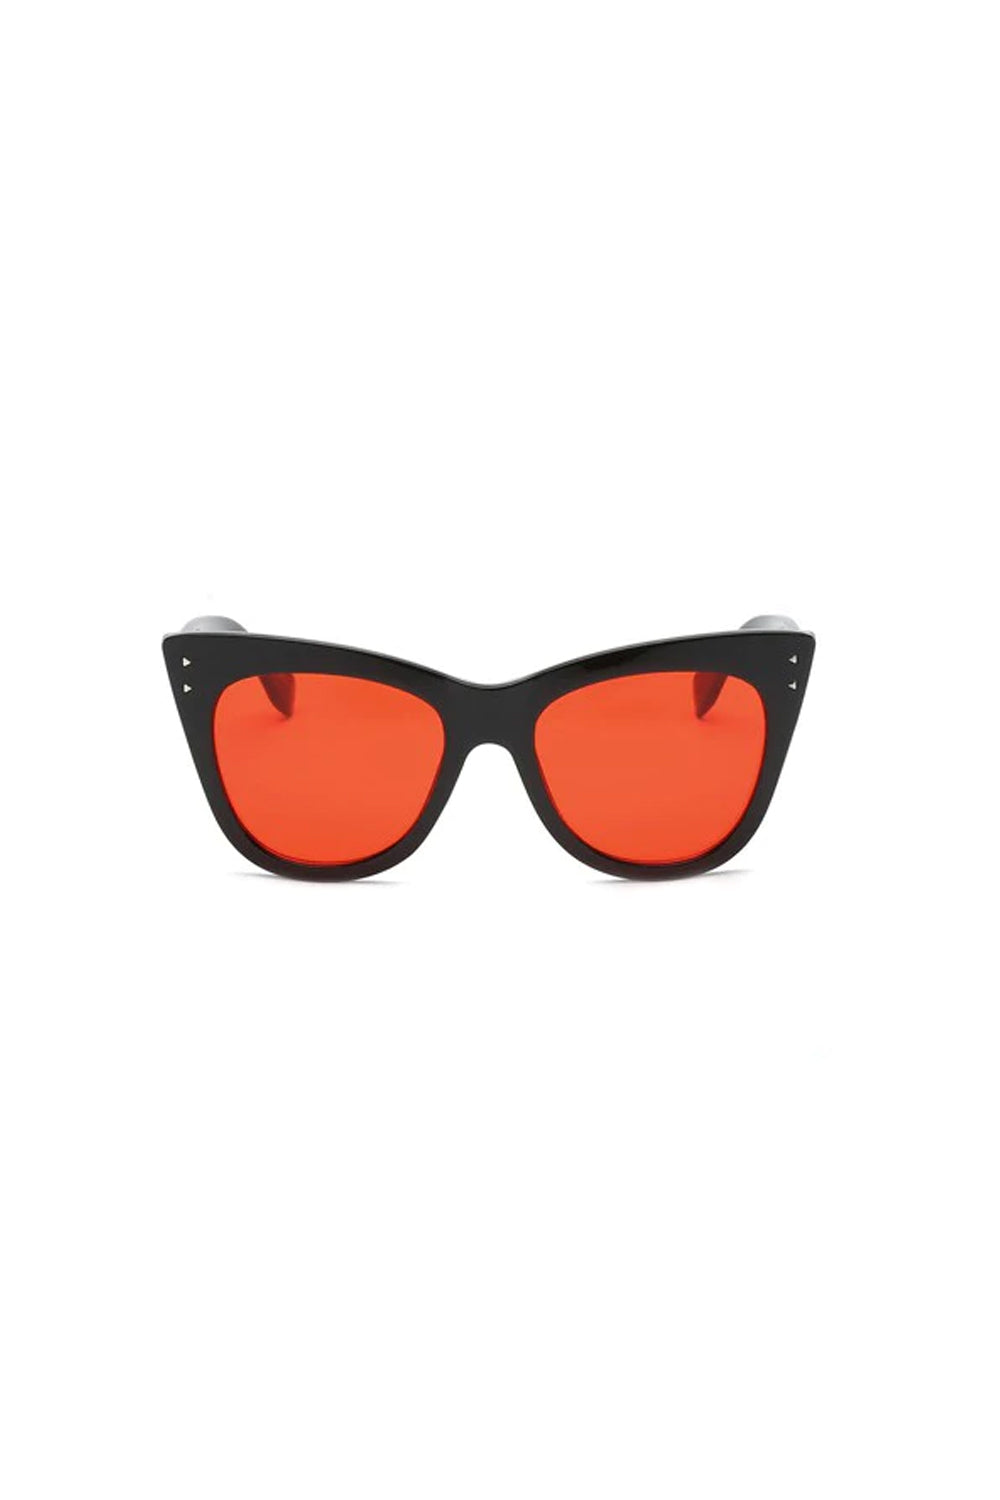 Women Cat Eye Fashion Sunglasses - Navy